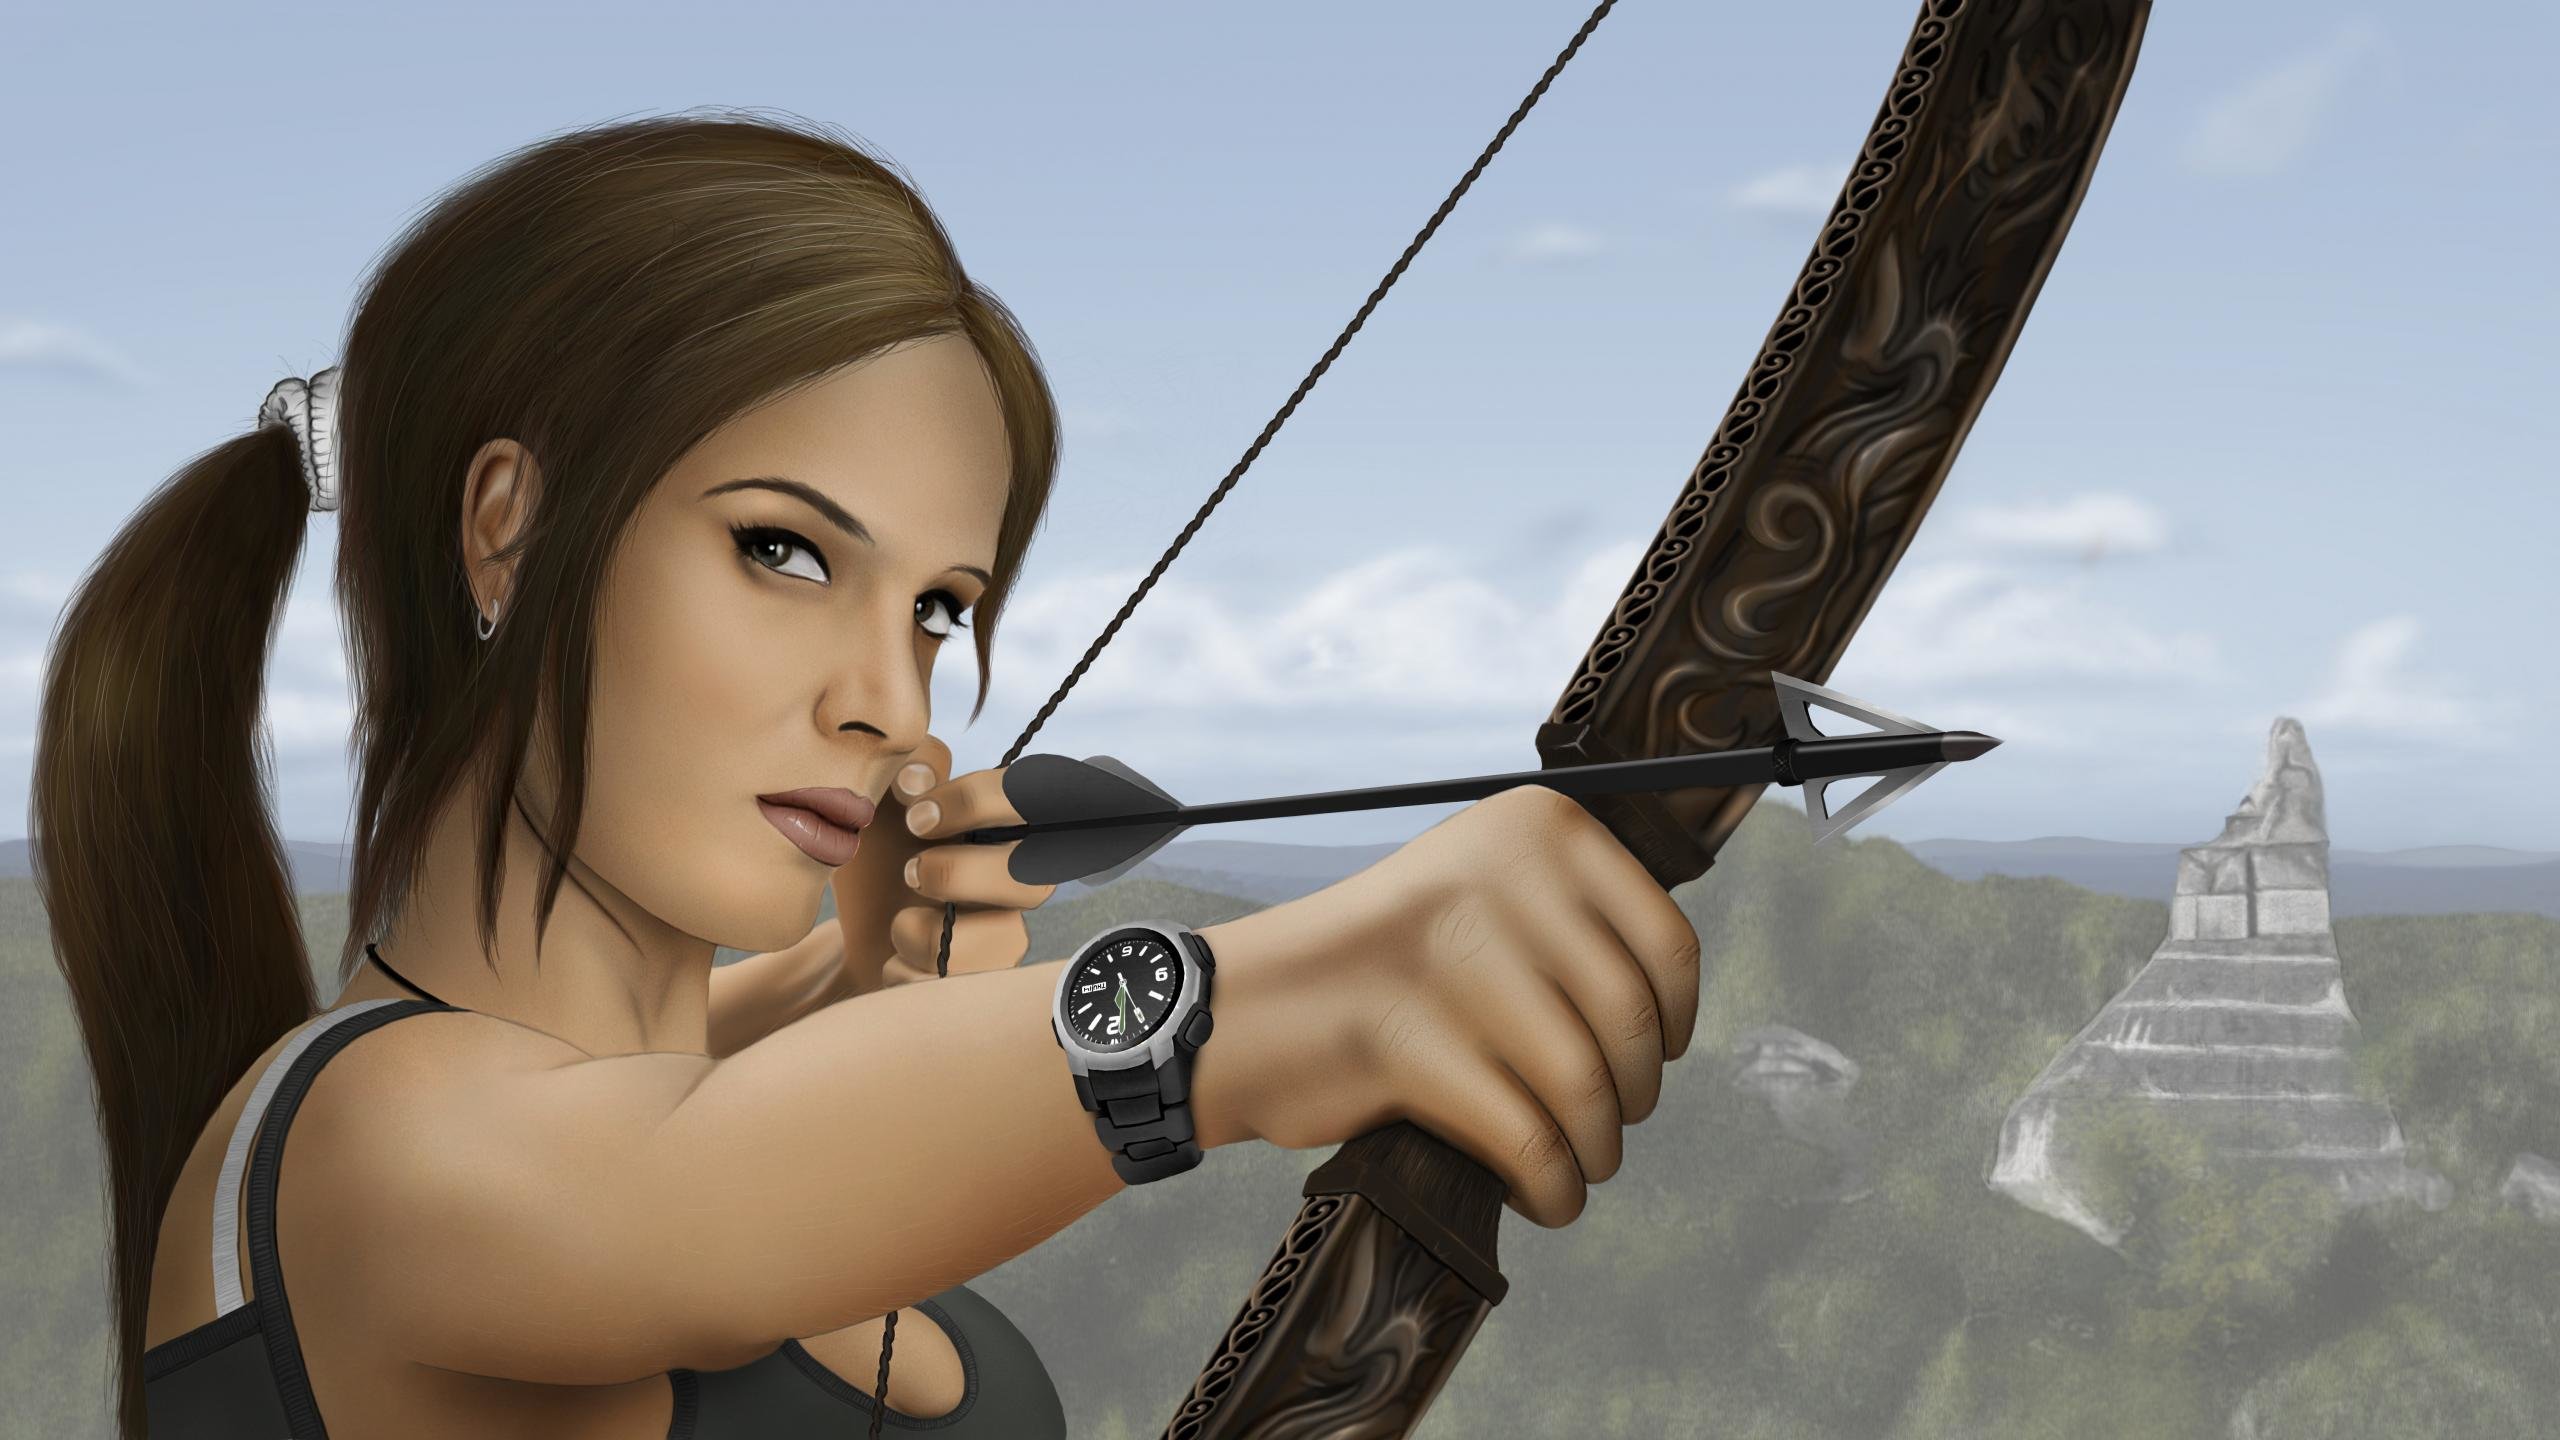 Best Tomb Raider (Lara Croft) wallpaper ID:437002 for High Resolution hd 2560x1440 desktop